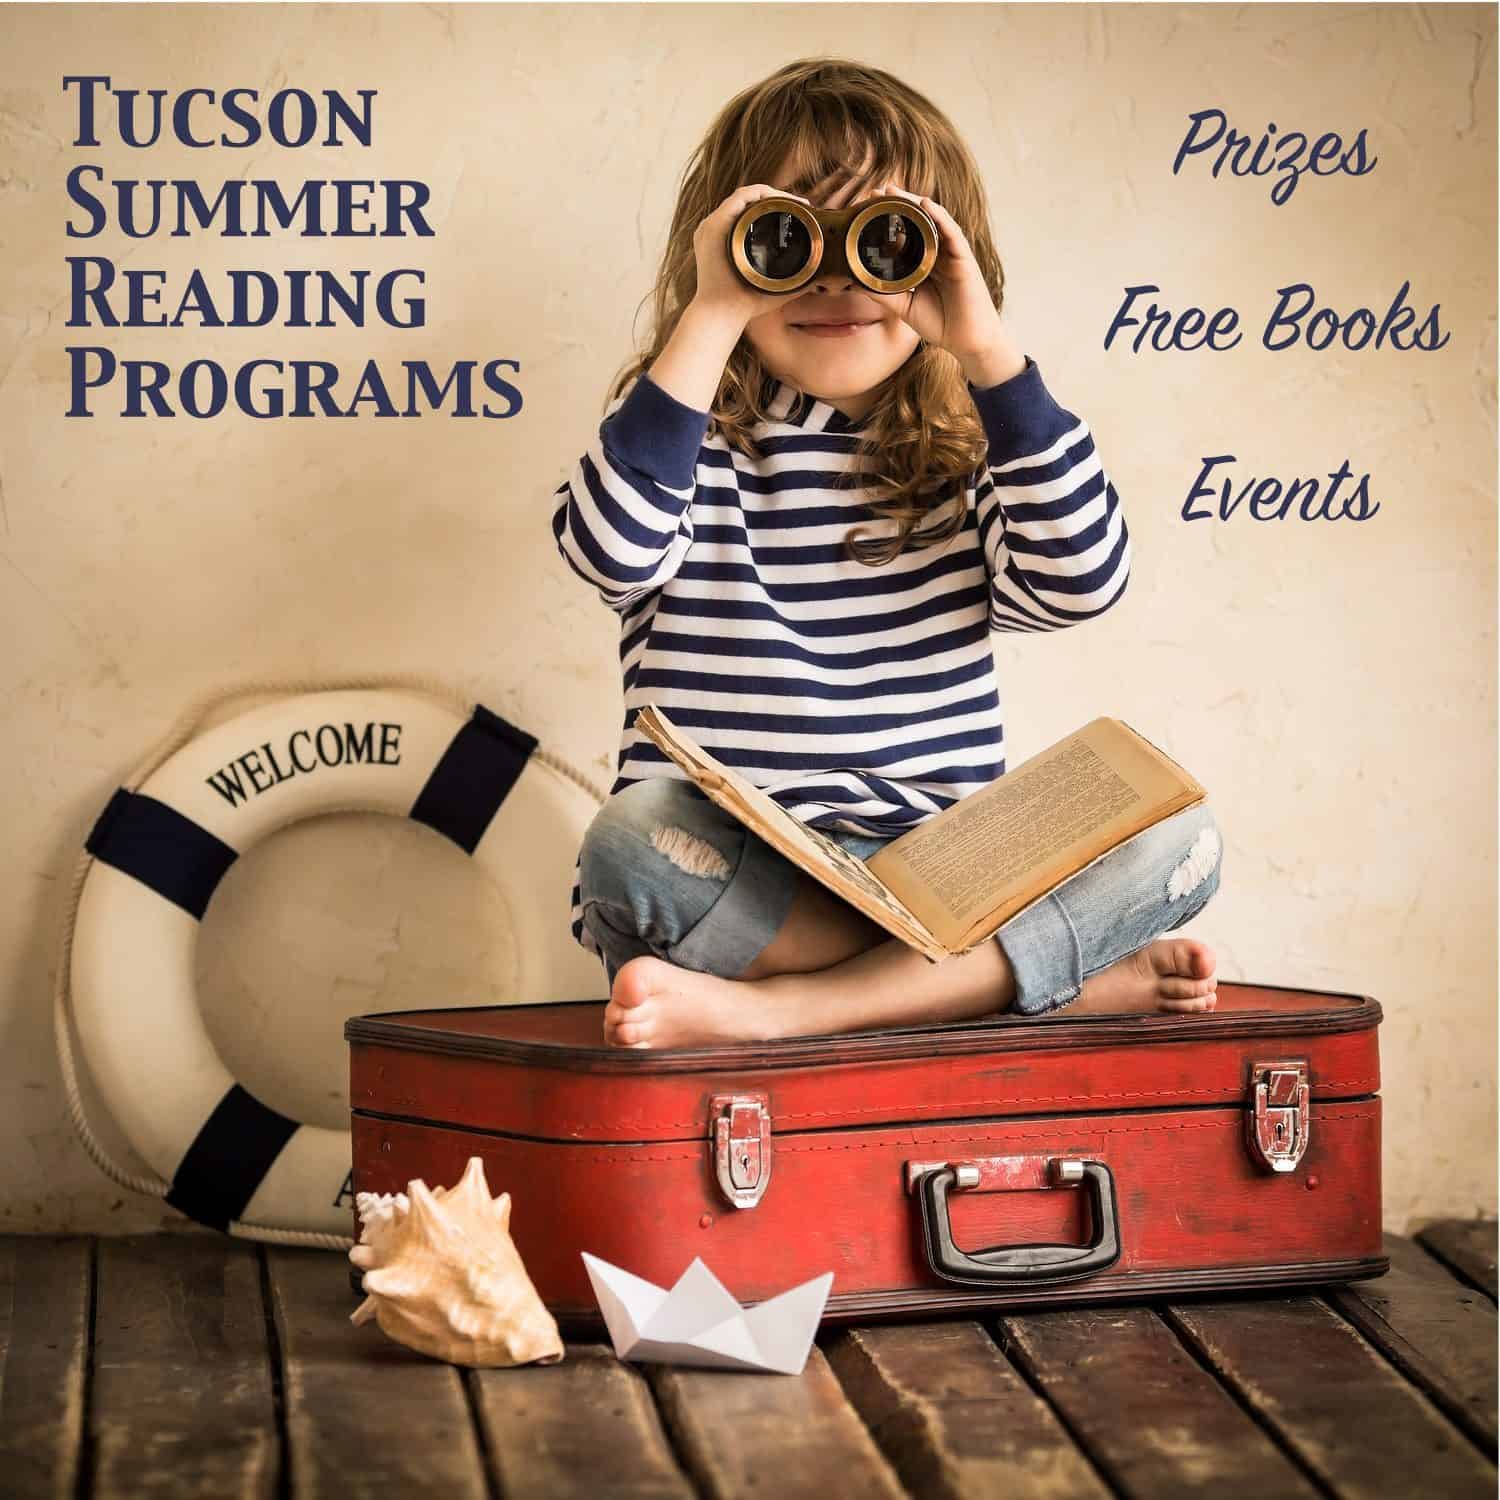 Tucson Summer Reading Programs